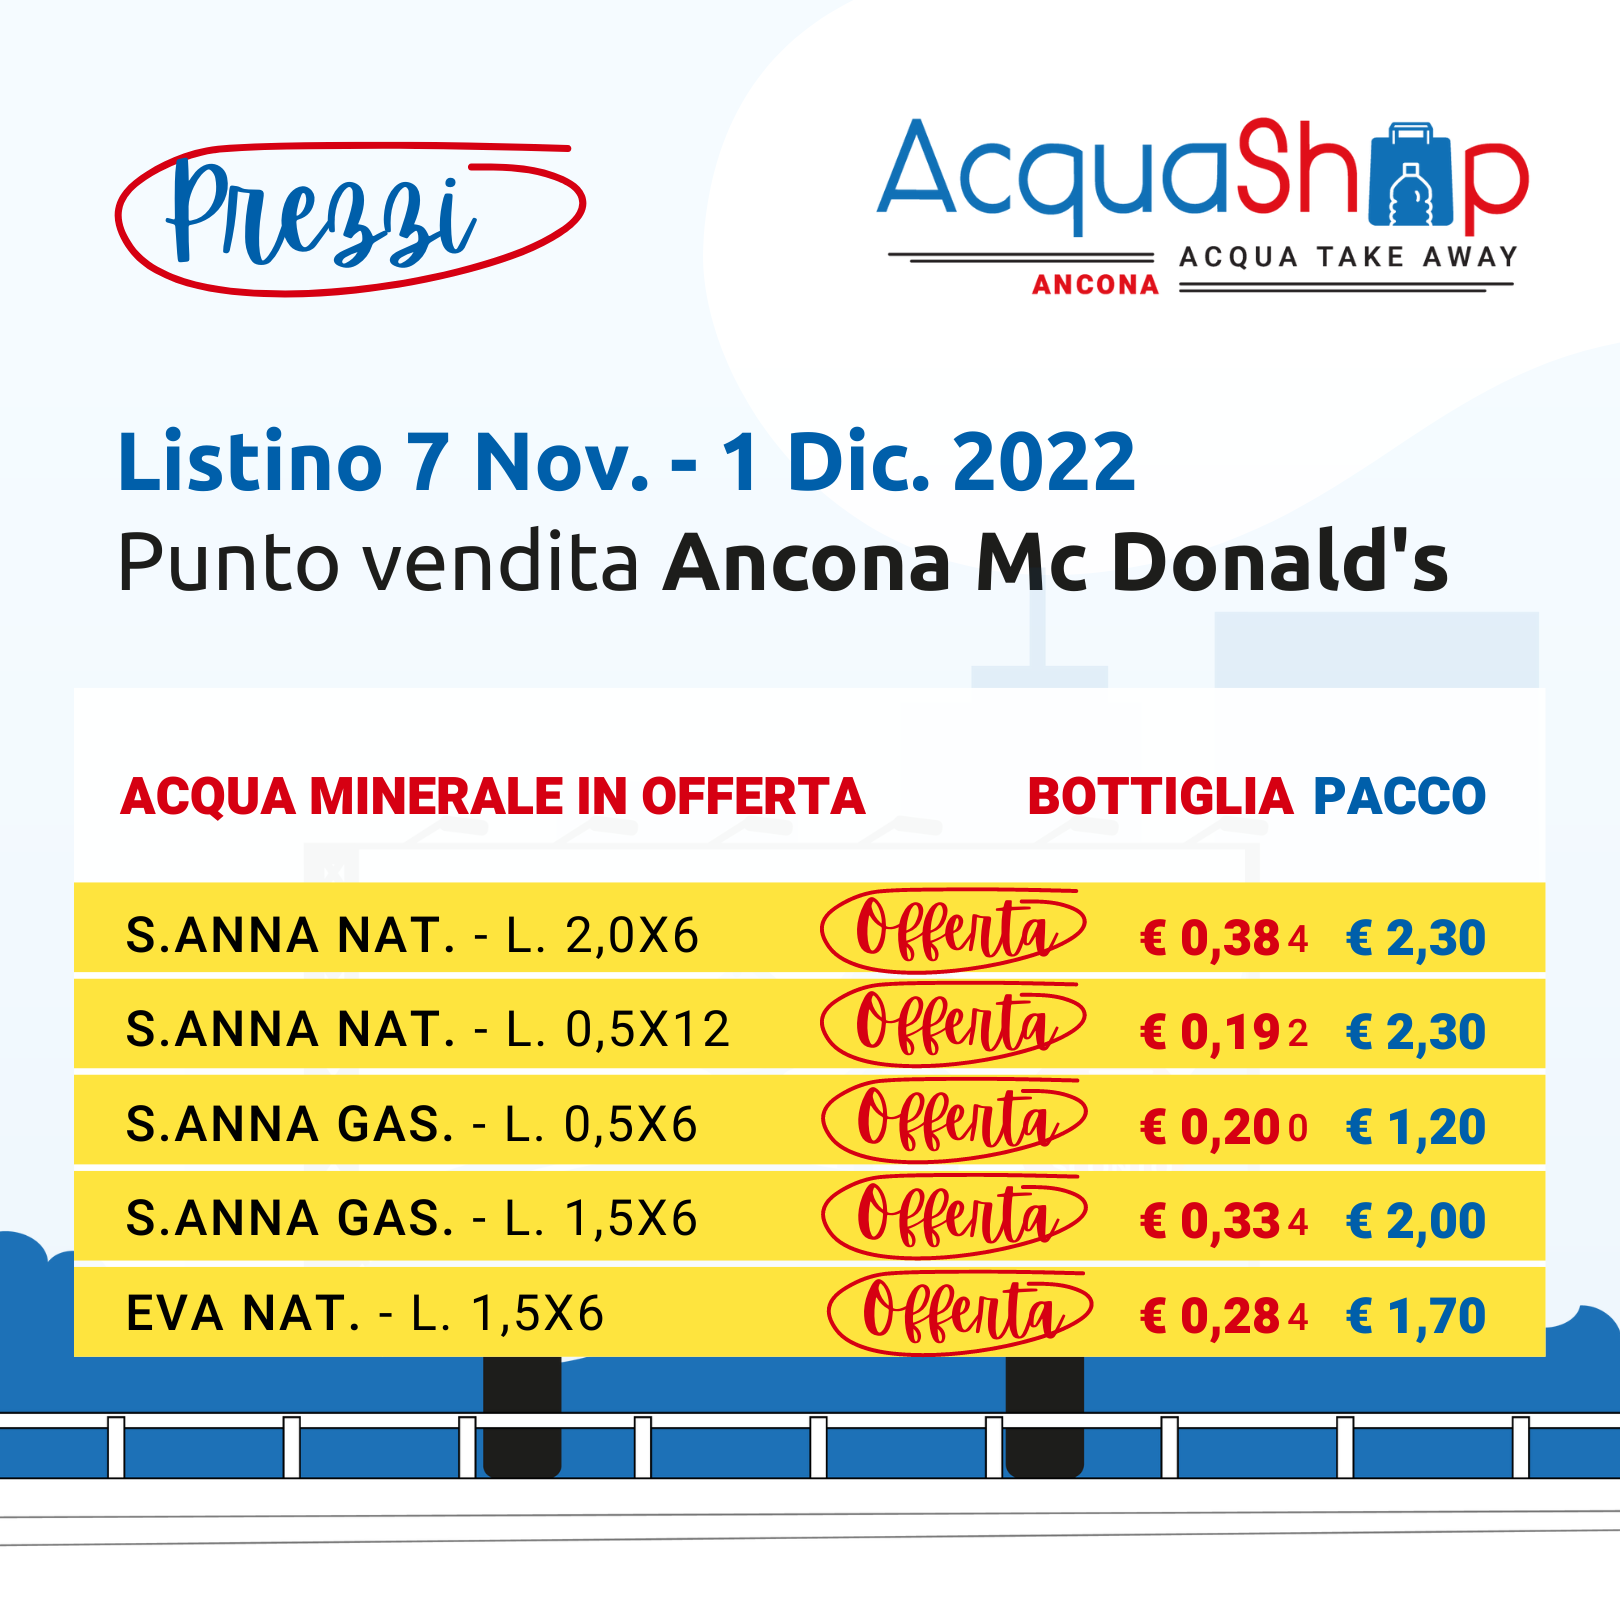 ANCONA MC DONALD'S Listino Nov 22 - 1